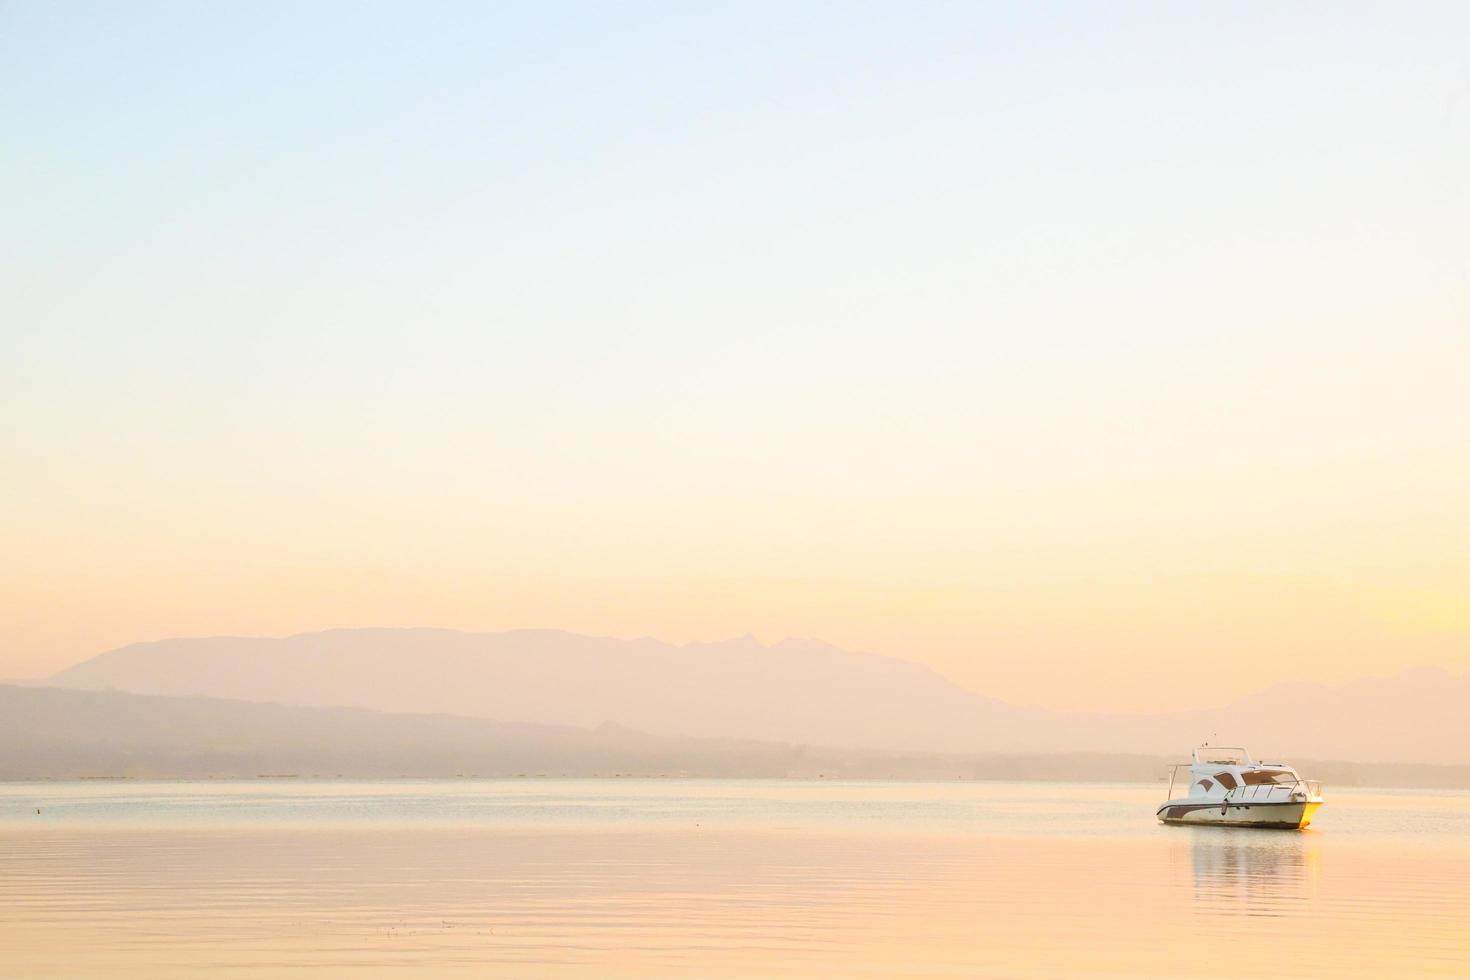 sjöbåt på orange solnedgång bakgrund i toba sjön foto